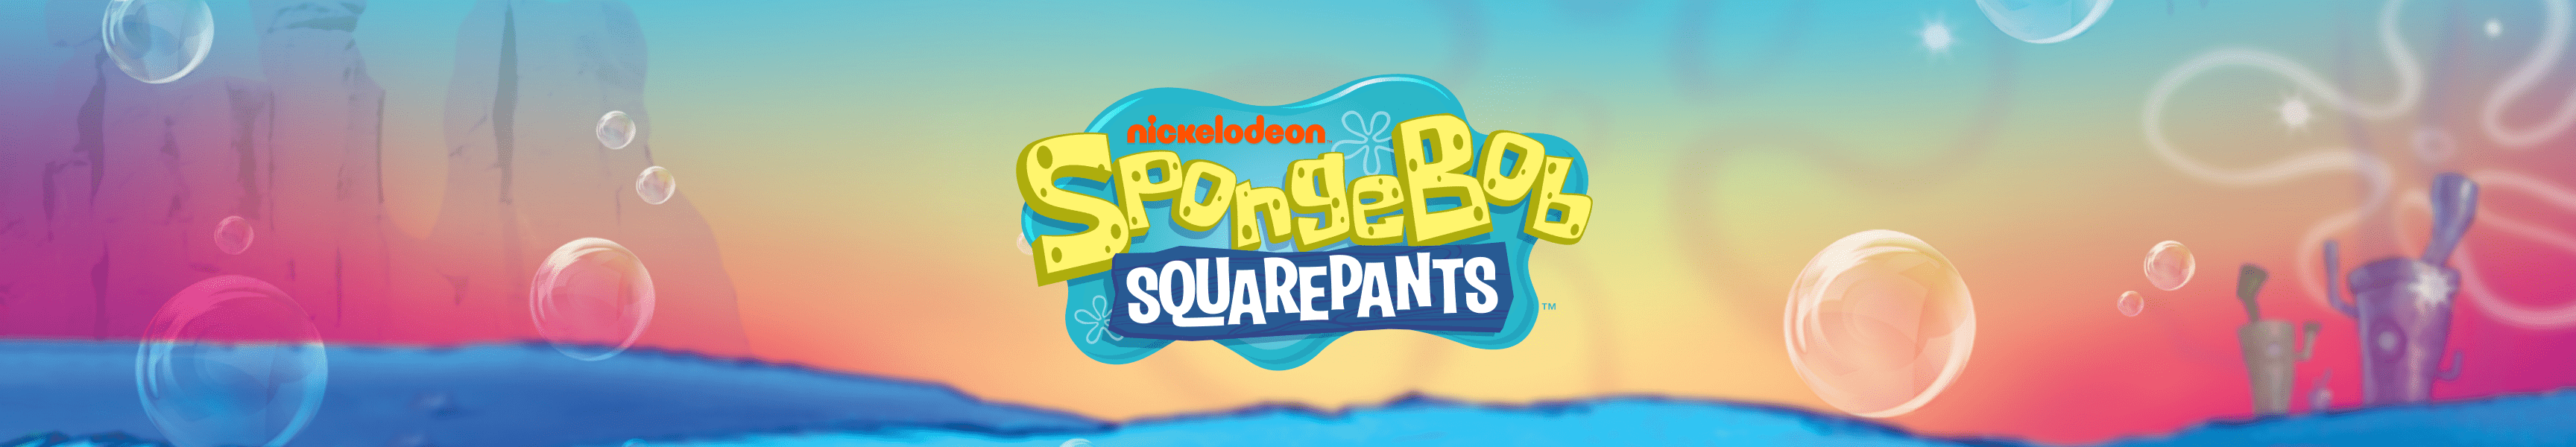 SpongeBob SquarePants St. Patrick's Day